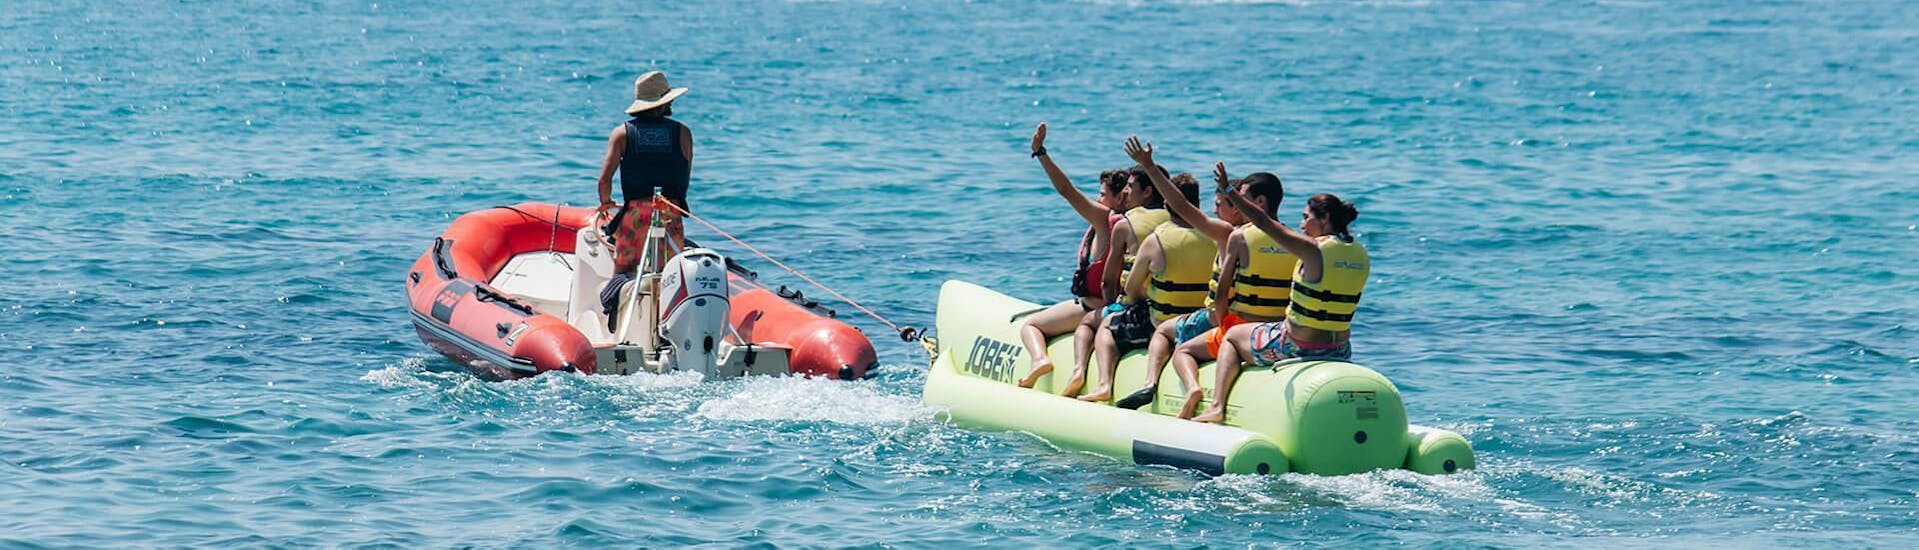 Un grupo de amigos disfrutando de la expercia de un tour en Banana Boat en Salou organizado por Nàutic Parc Costa Daurada.